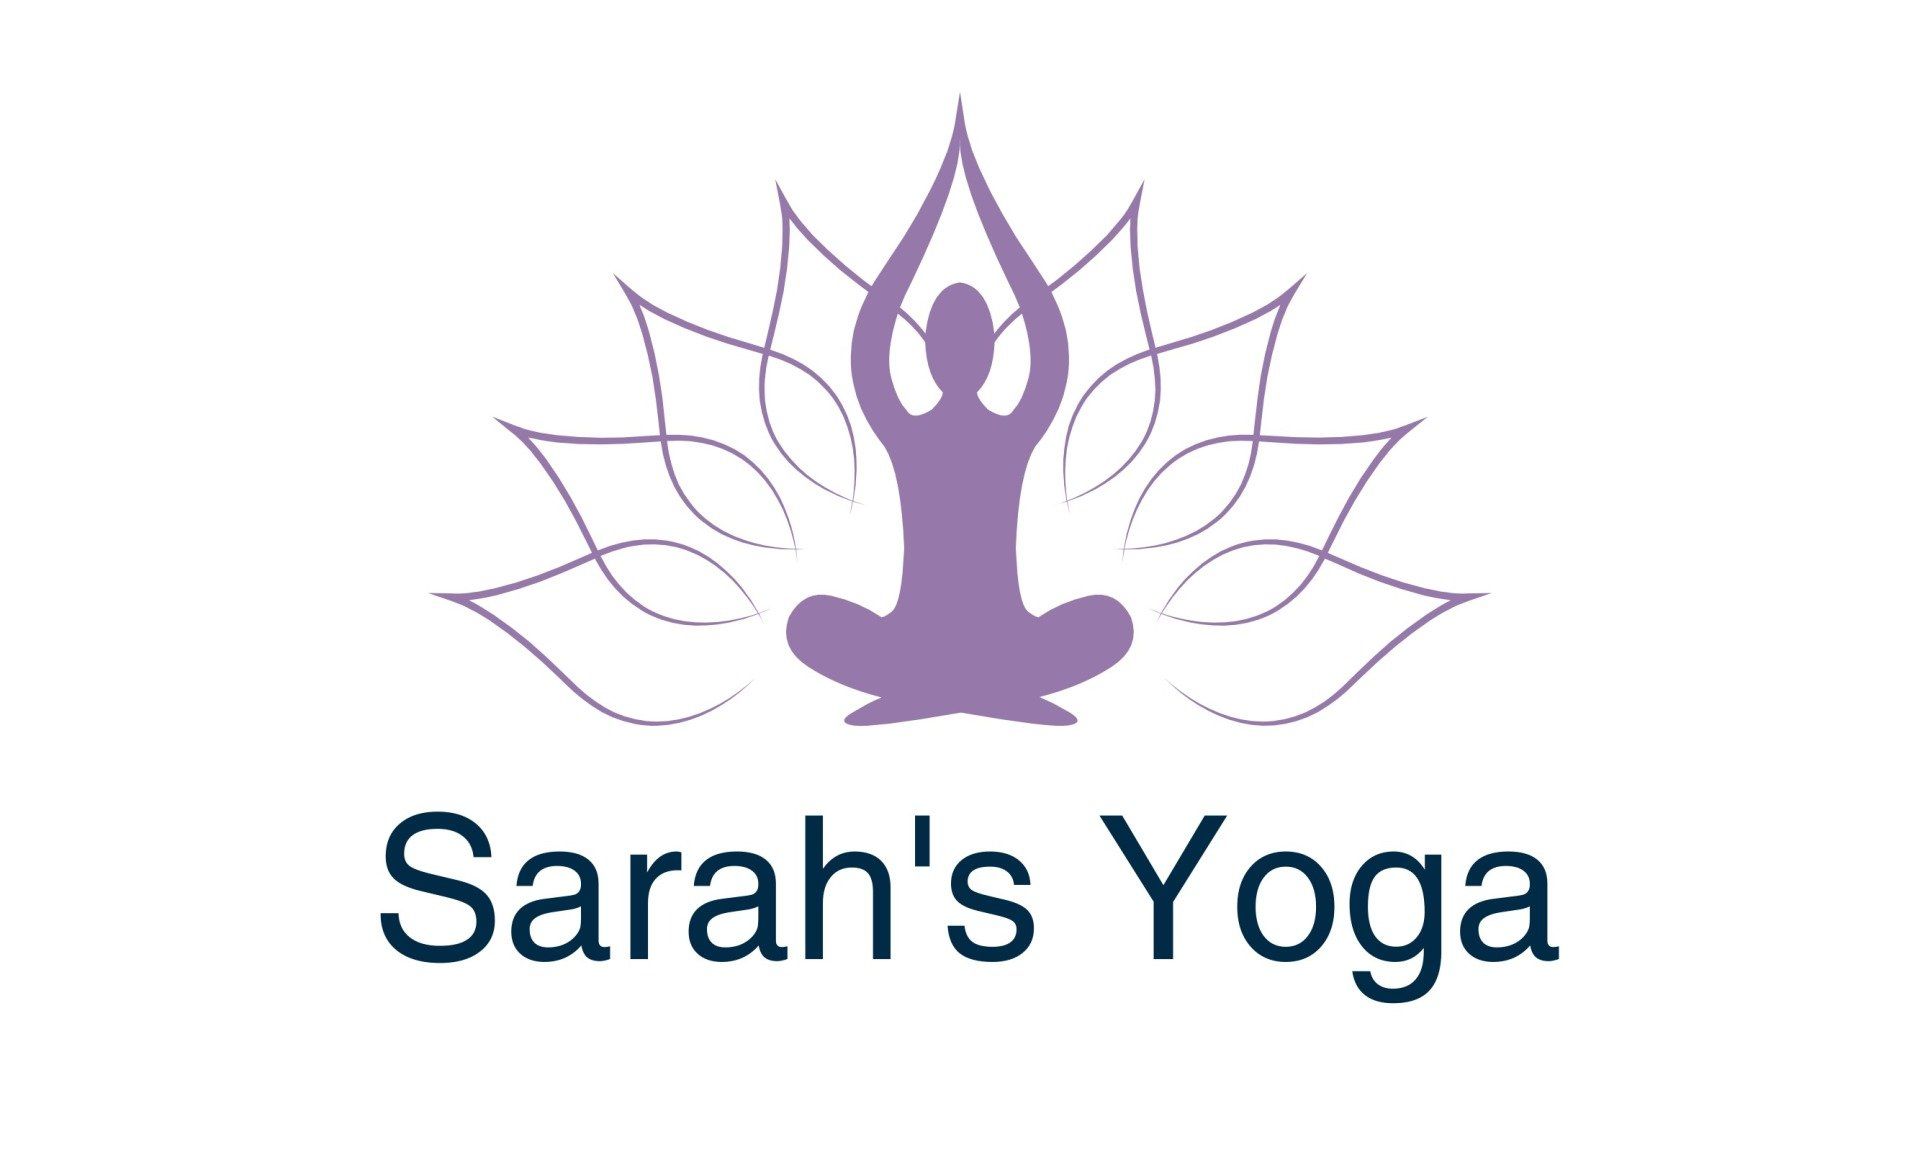 Sarah's Yoga